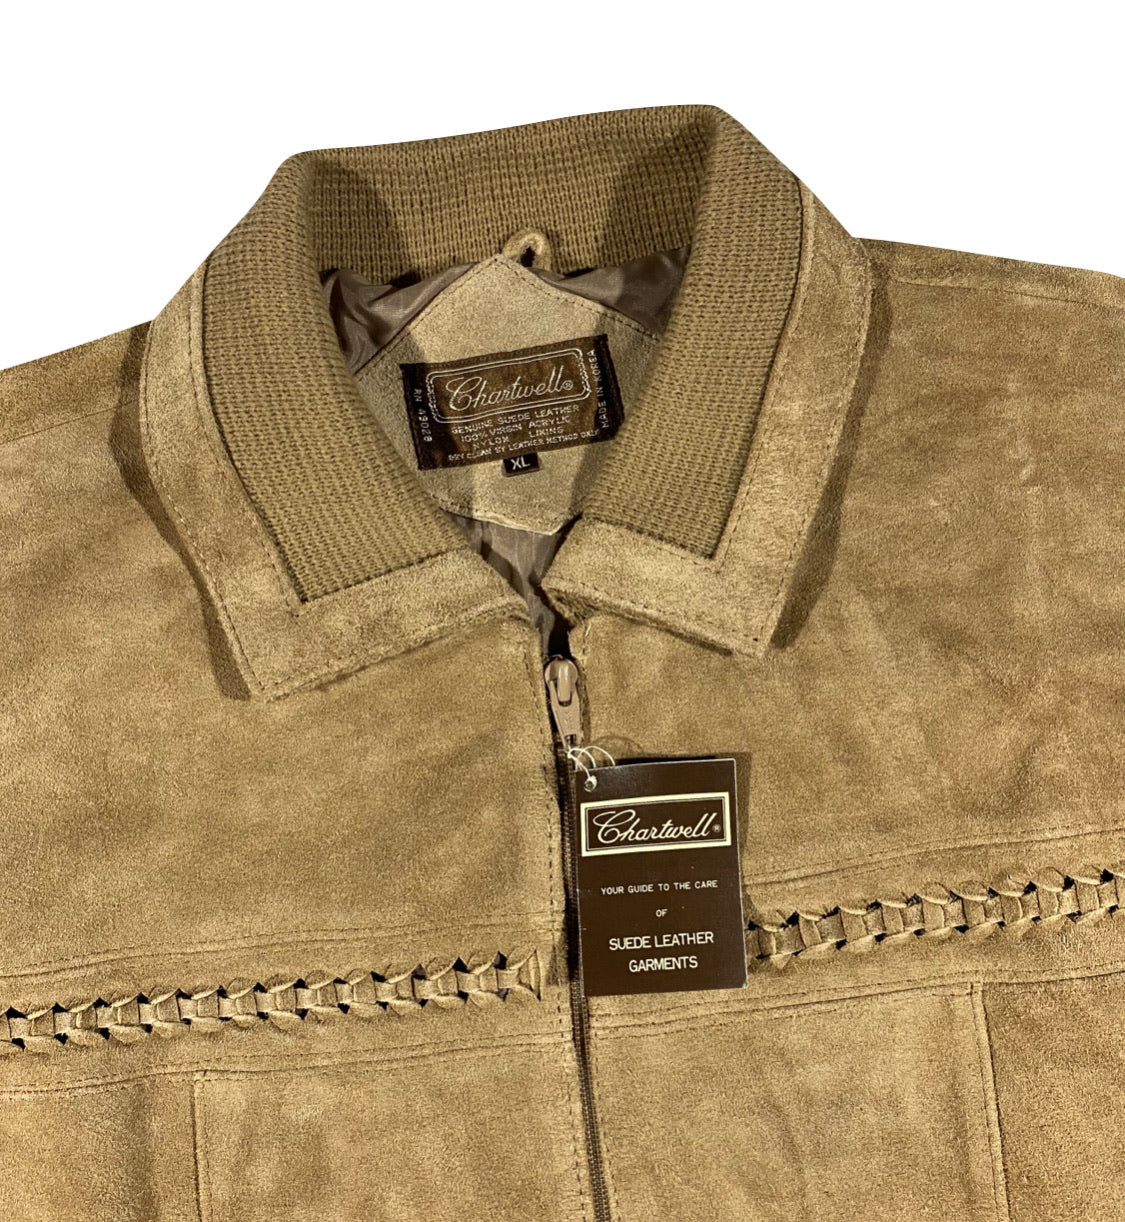 80s suede blend jacket. L/XL wise